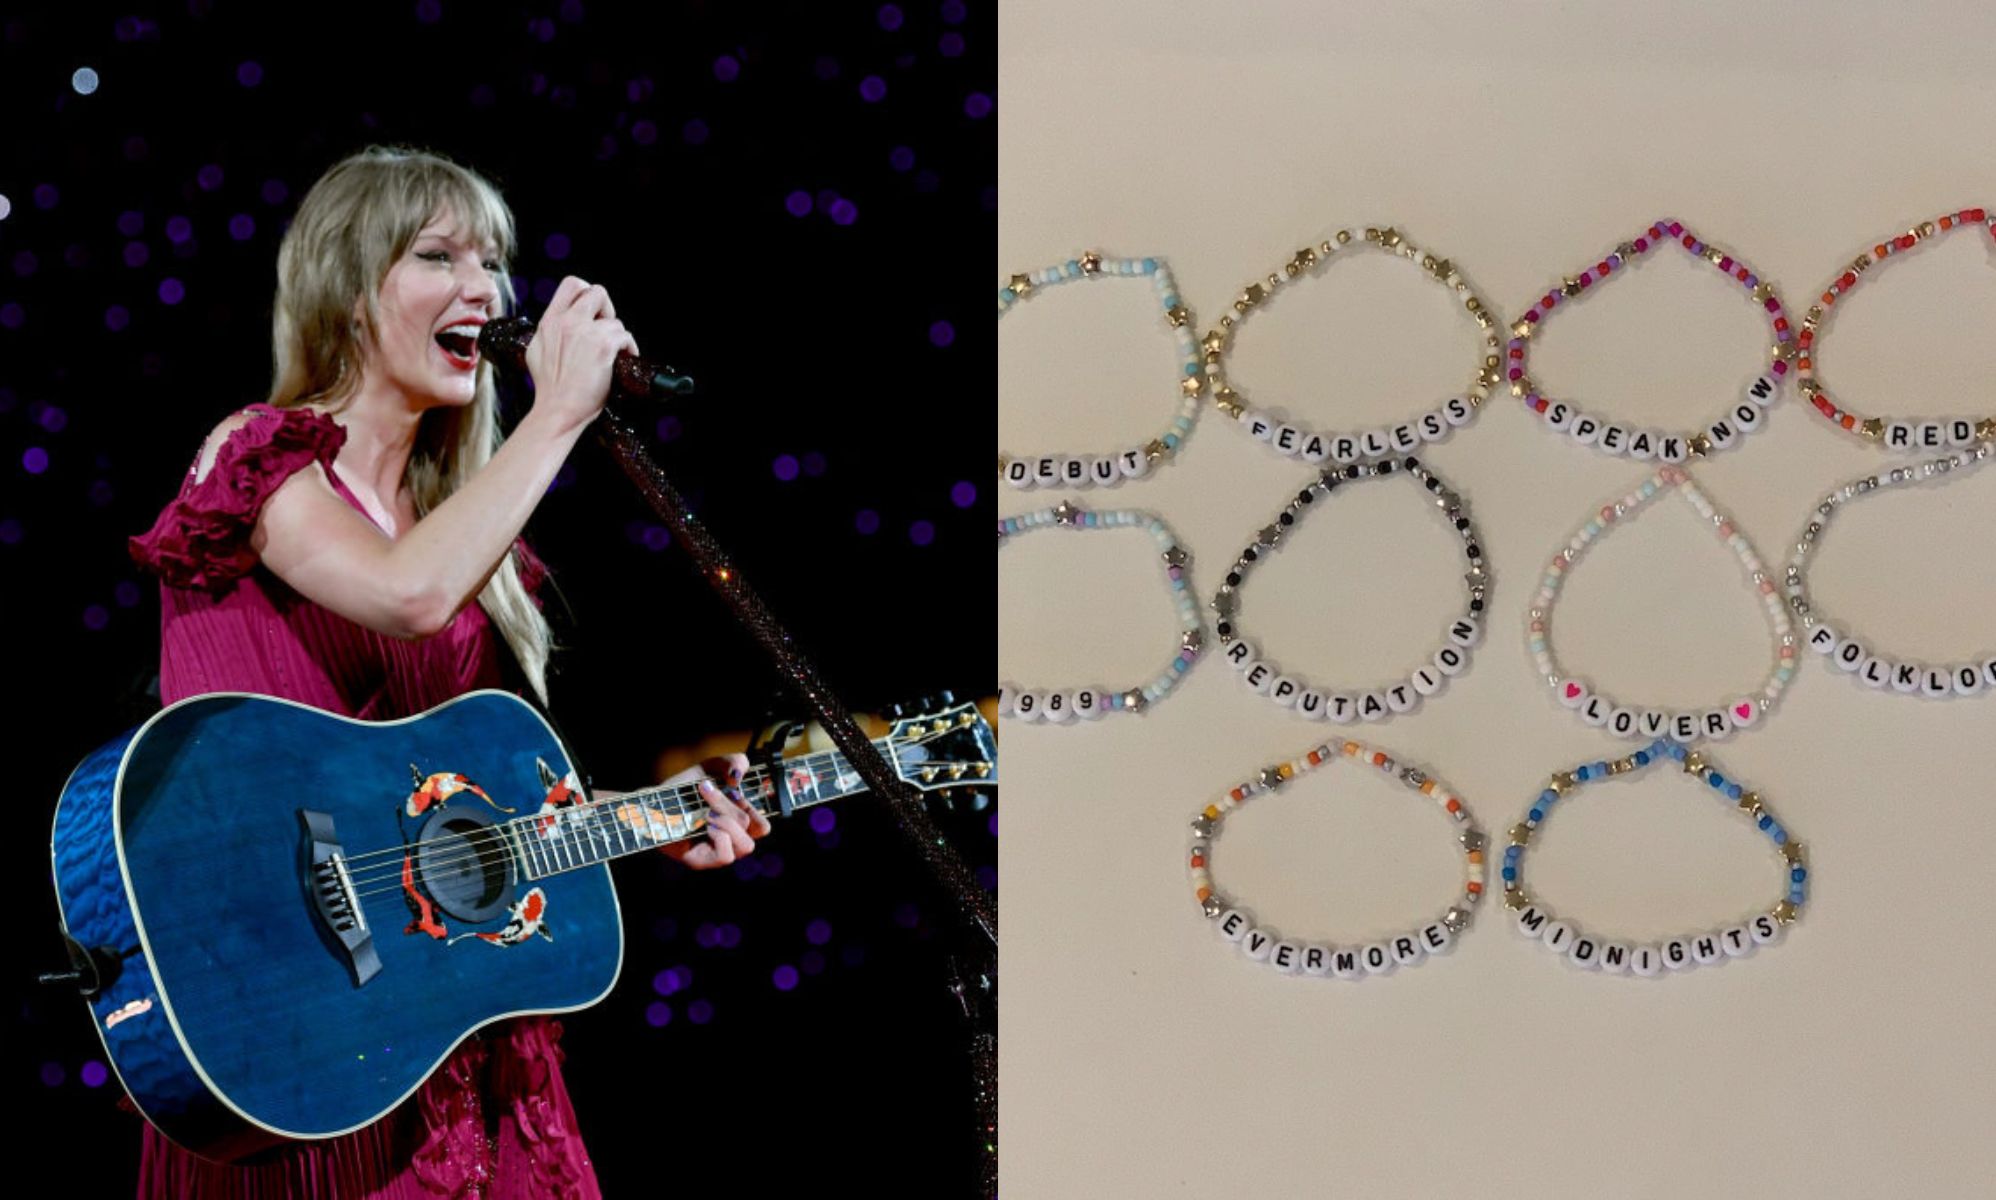 Lover DIY Friendship Bracelet Kit (Taylor Swift Eras Tour)